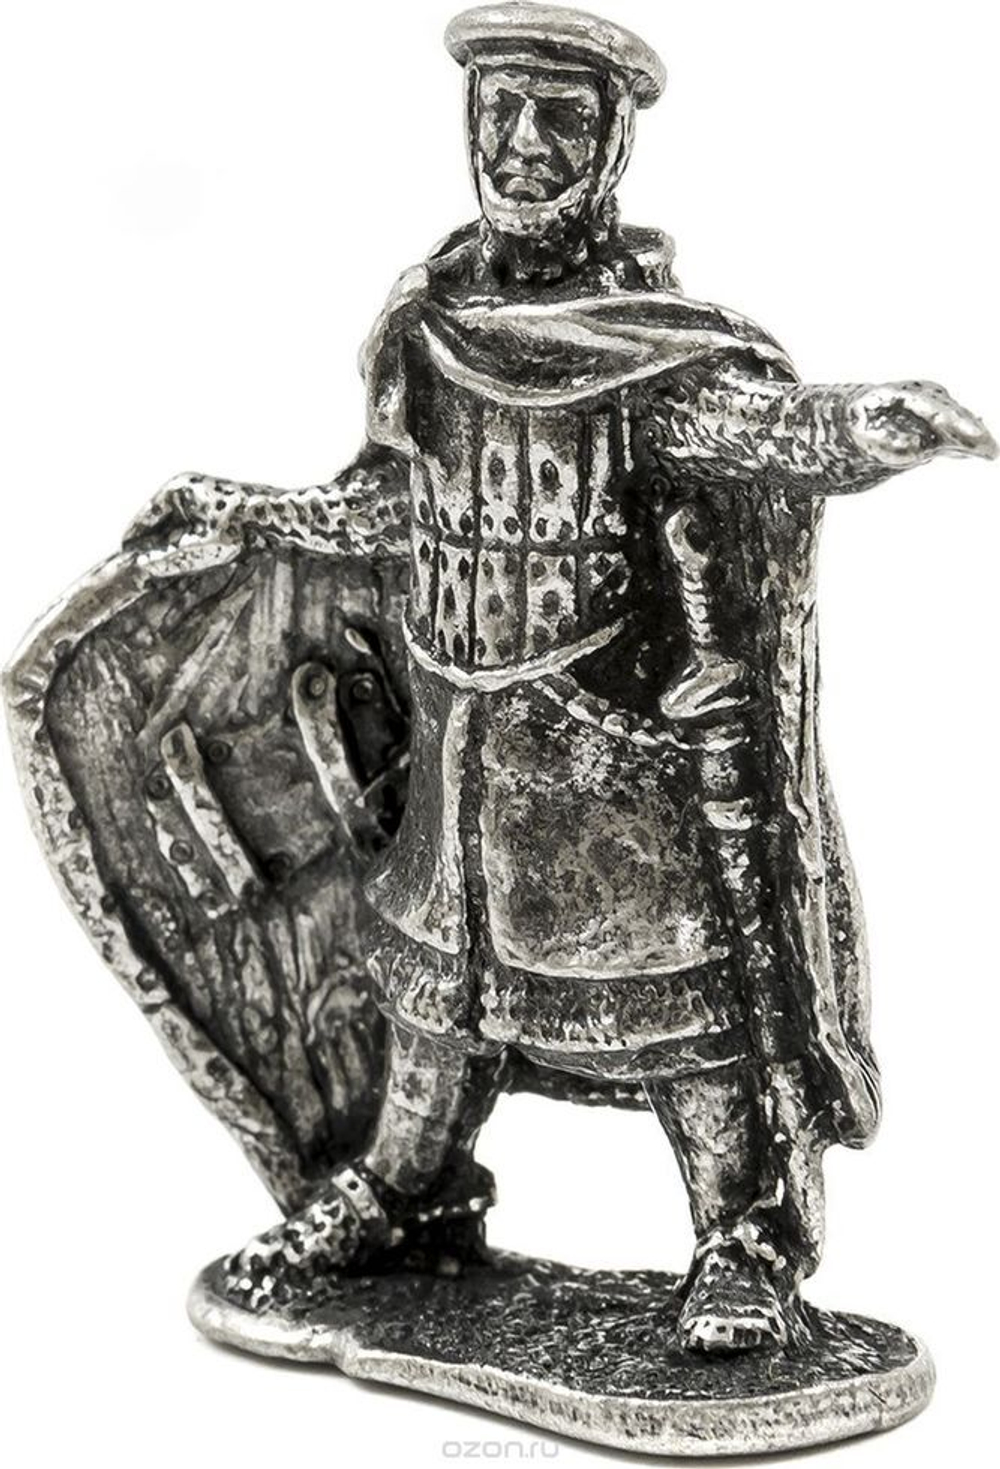 Фигурка Рыцари "Трибун" олово. Игрушка литая металлическая 54 мм (1:32)